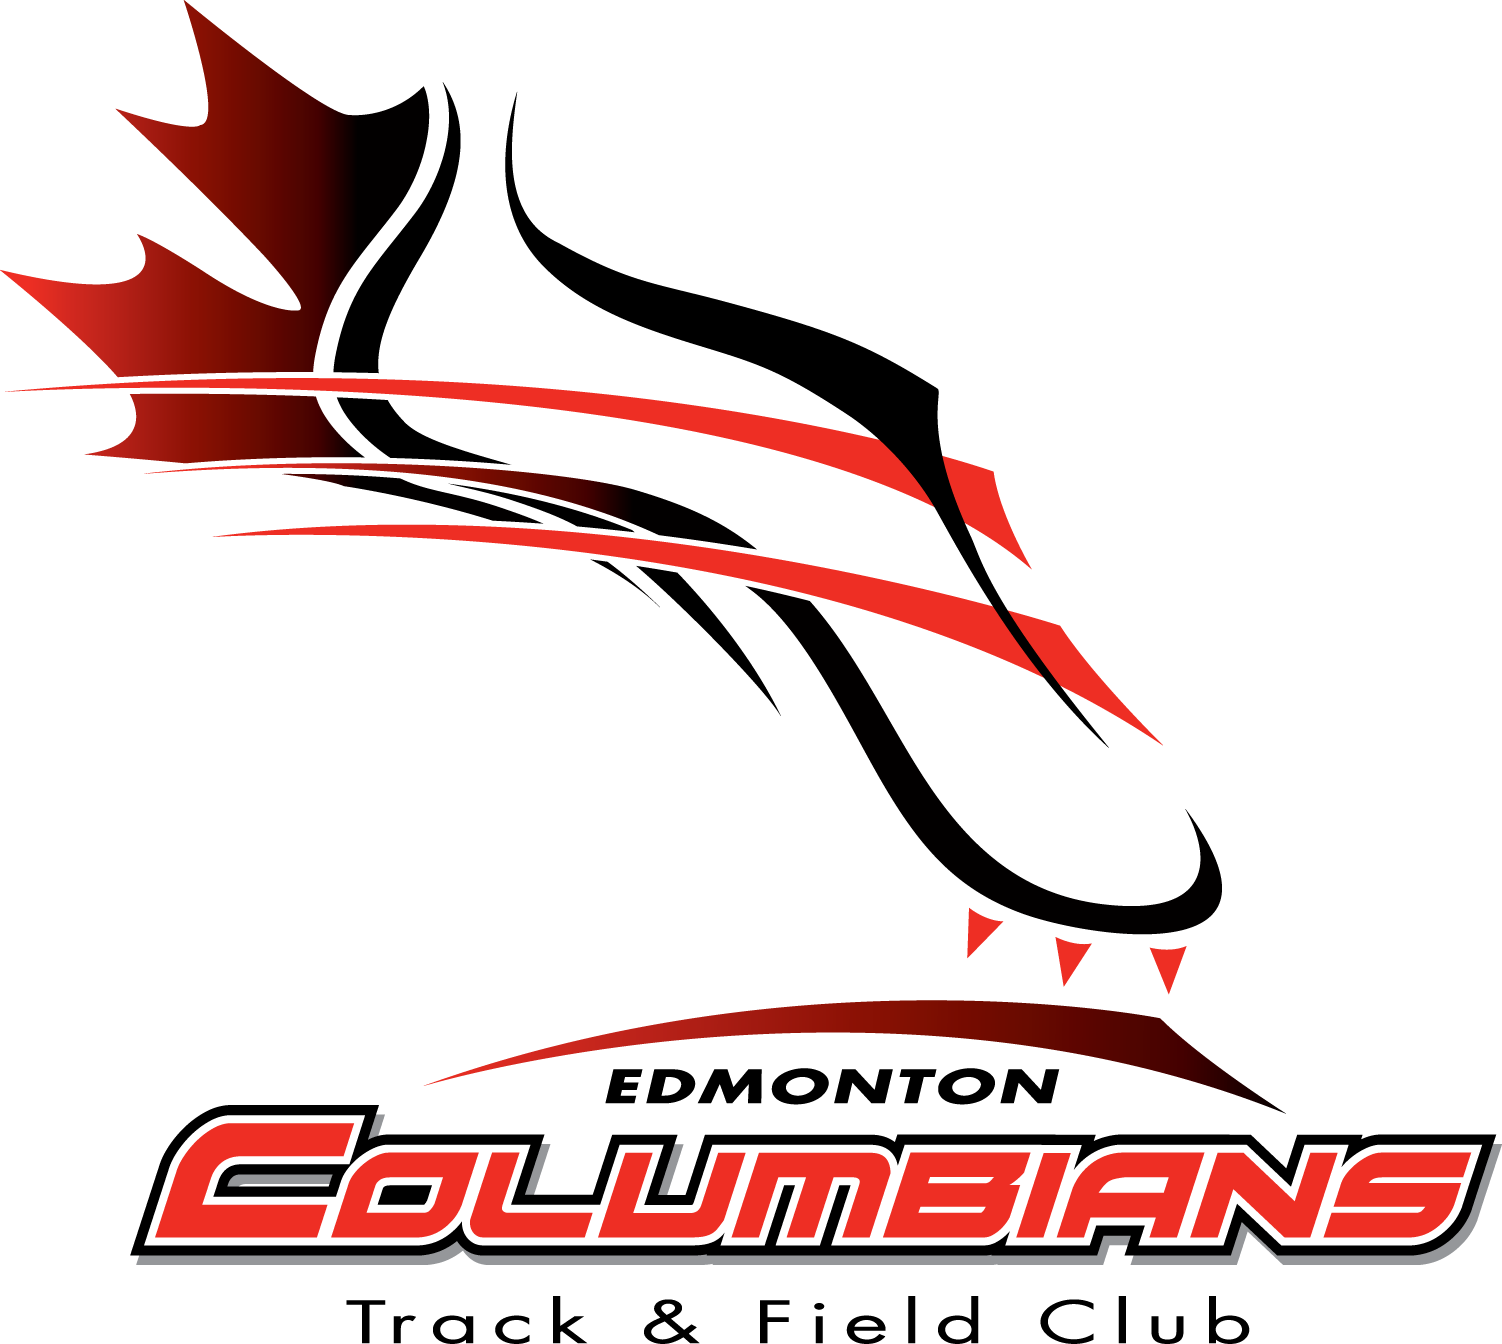 Edmonton Columbians Track and Field Club Registration